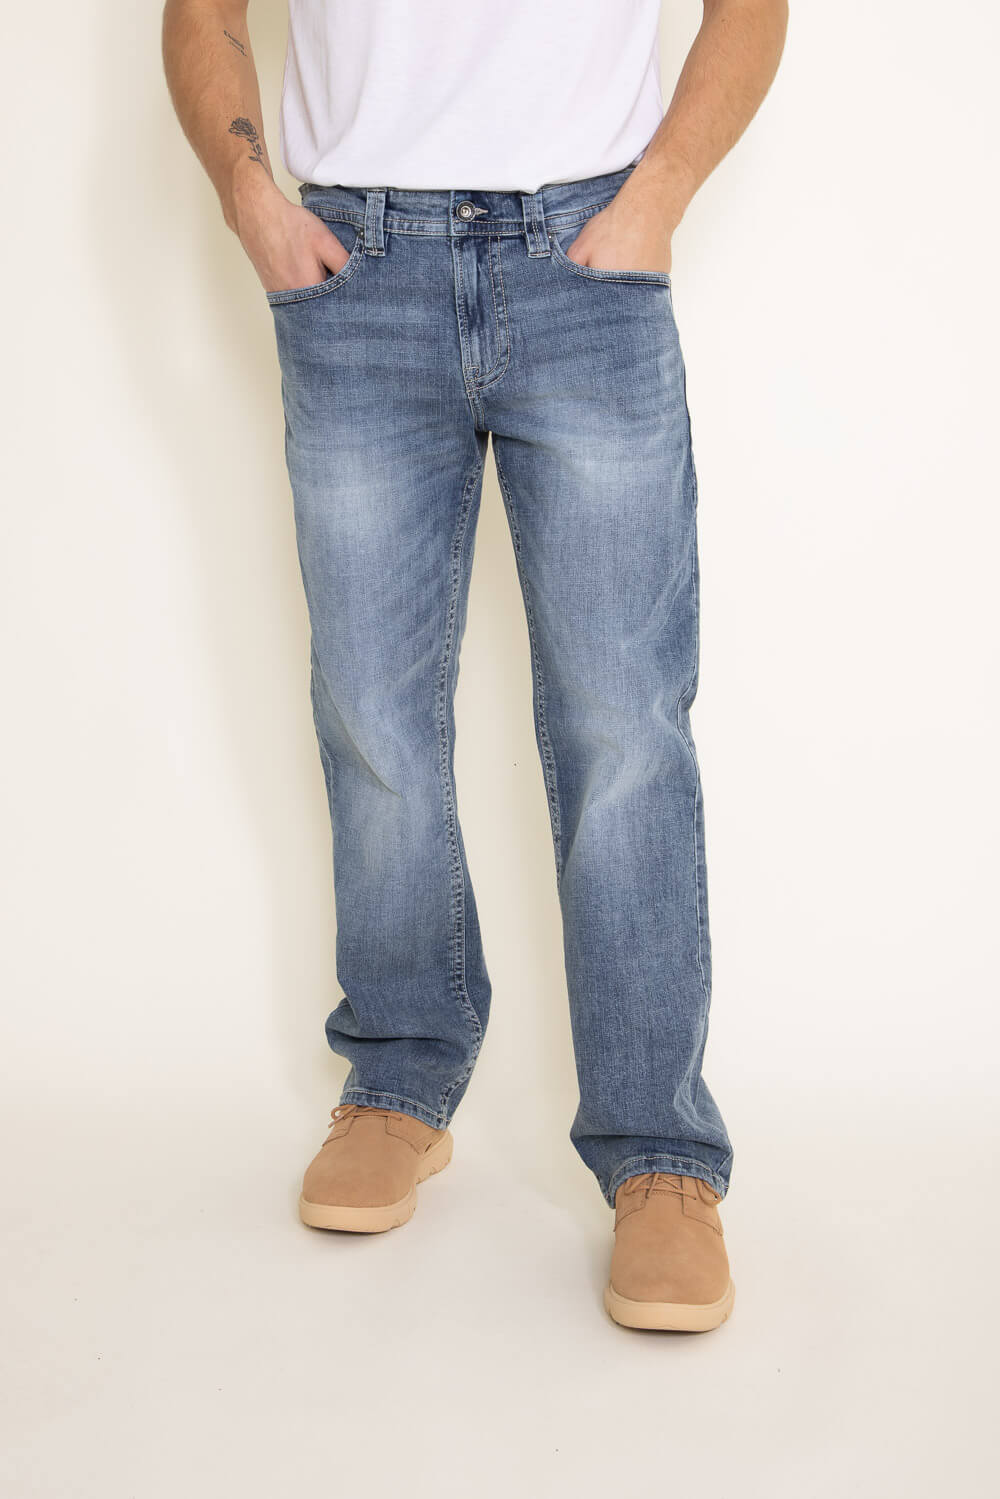 Axel Jeans David New Noawk Slim Boot Jeans for Men | AXMB0035-AVALANCH ...